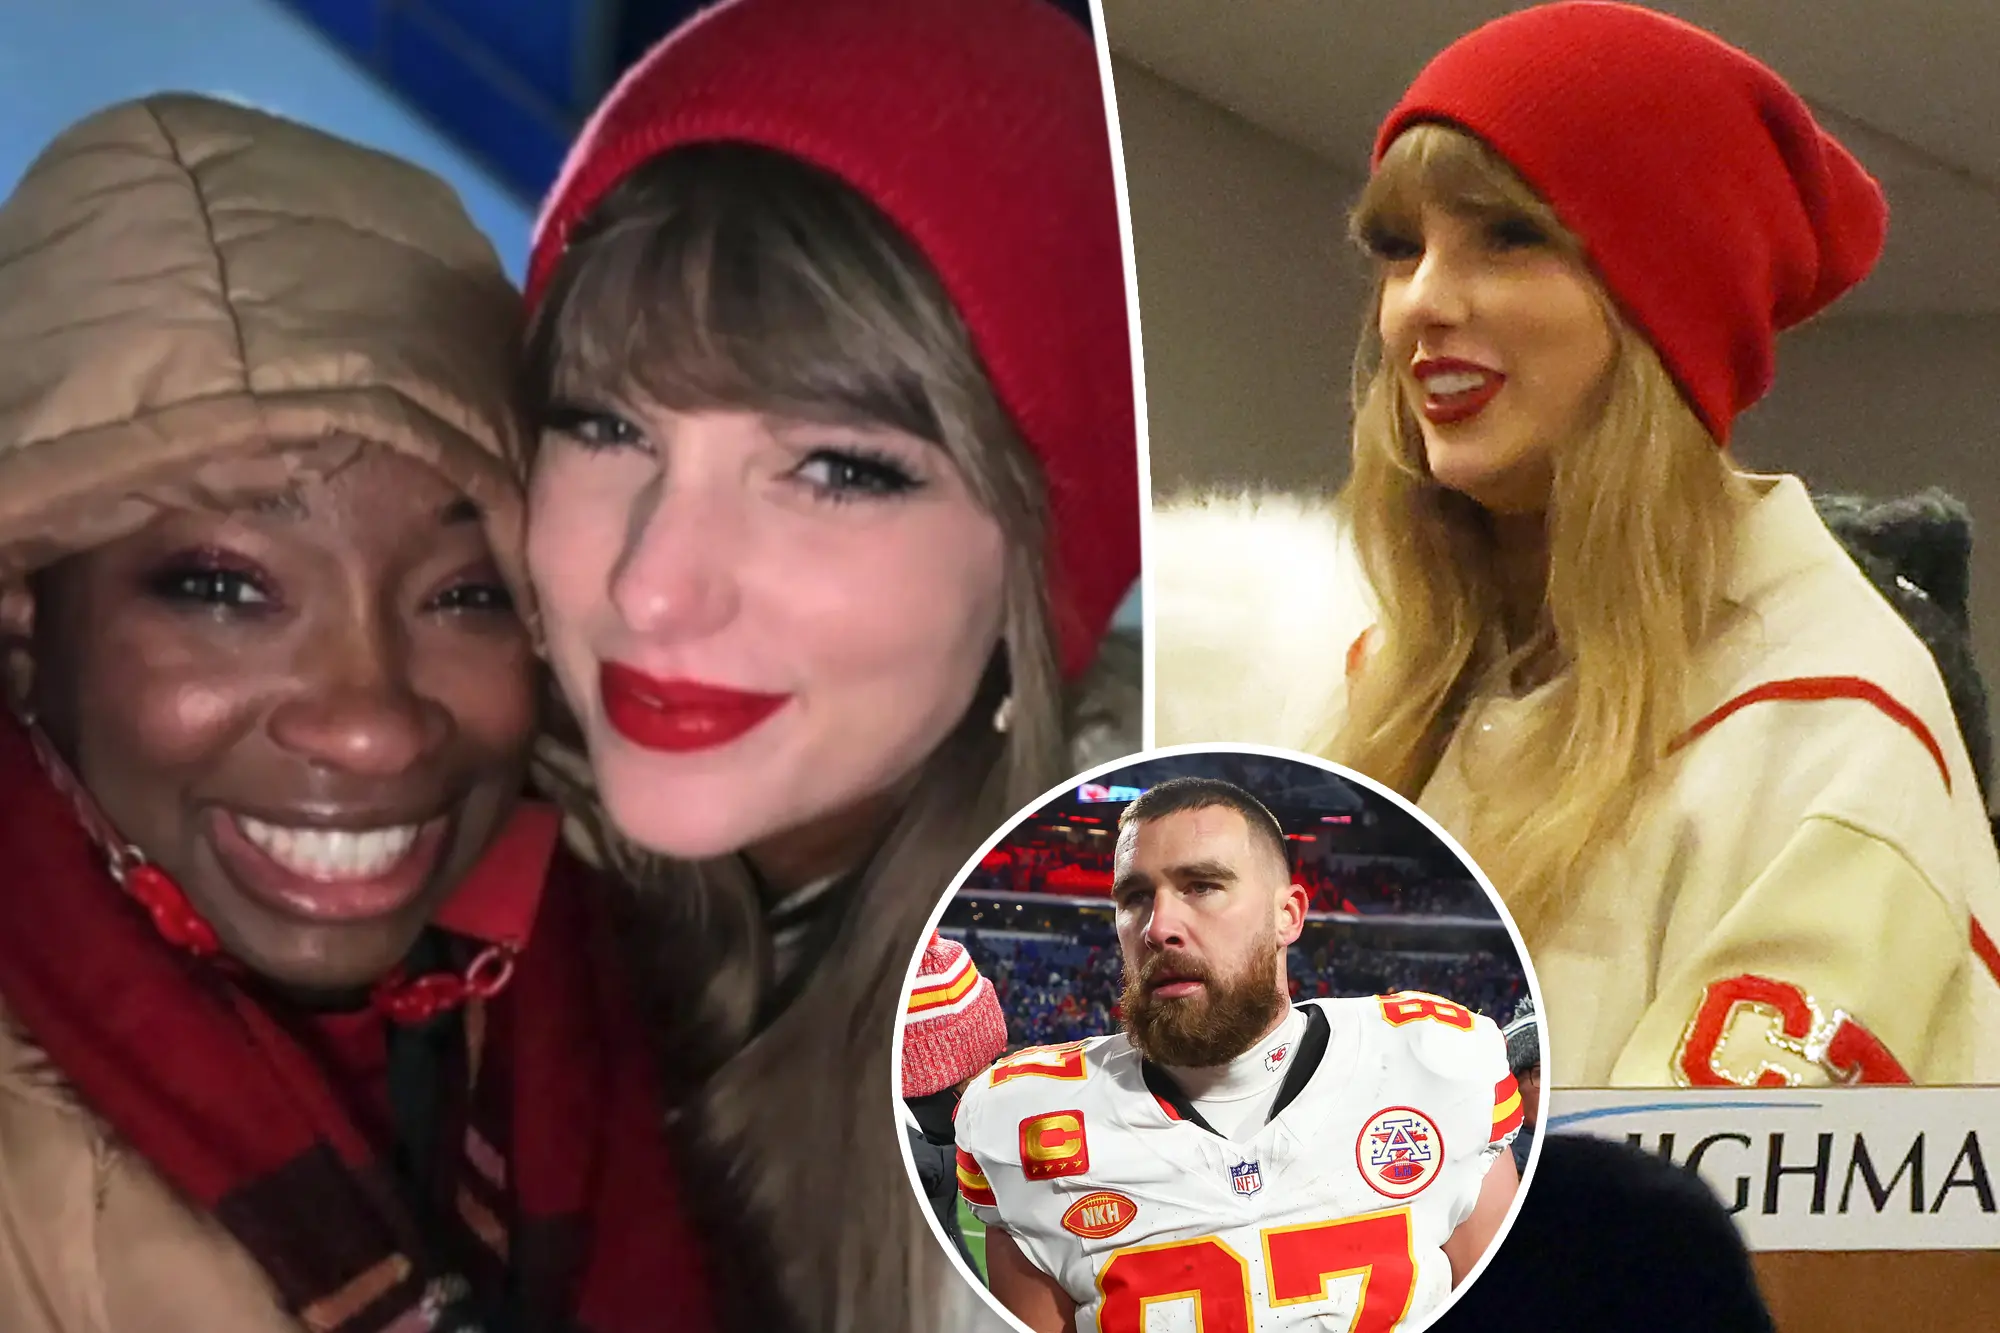 Taylor Swift tips stadium worker $100 after watching Travis Kelce’s Chiefs defeat Bills: ‘She’s a sweetie pie’